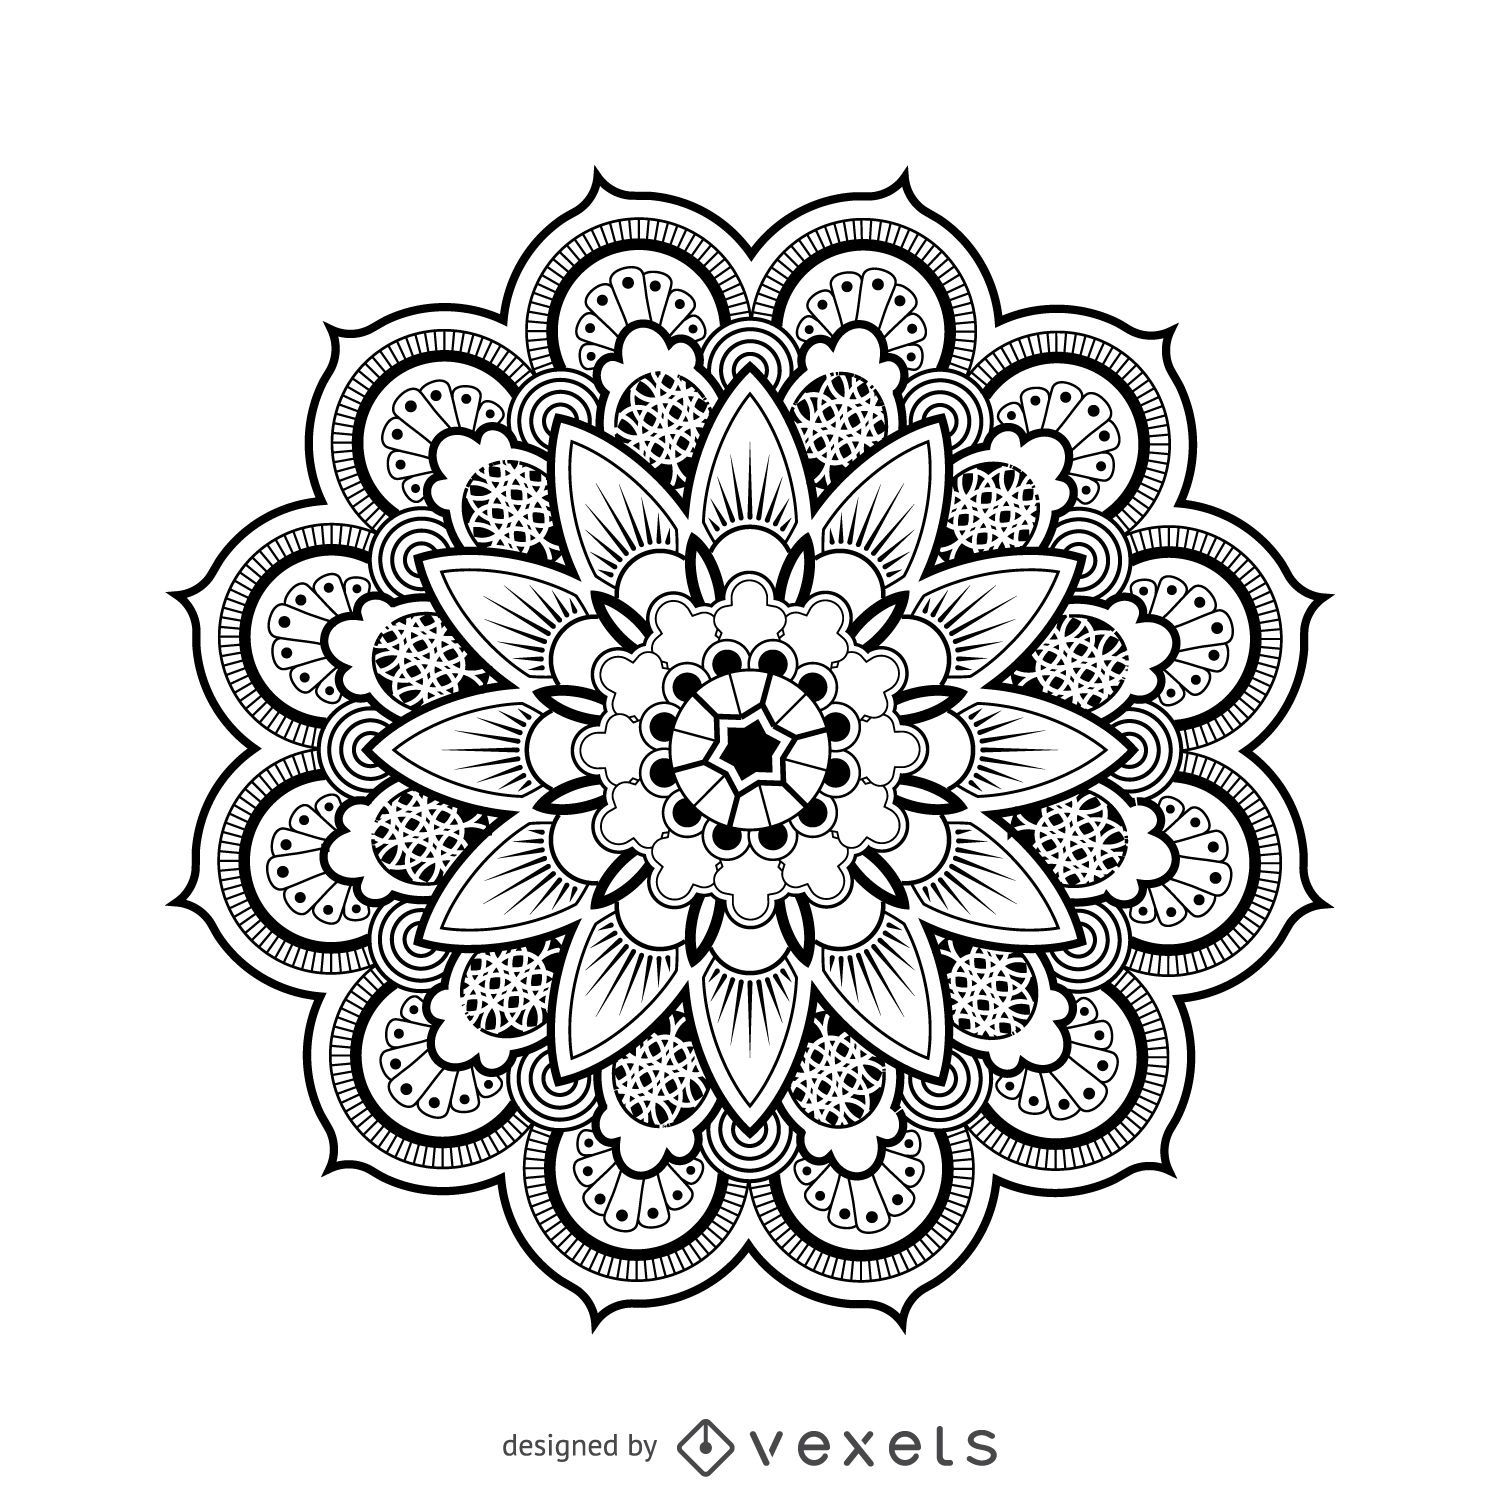 Mandala design drawing